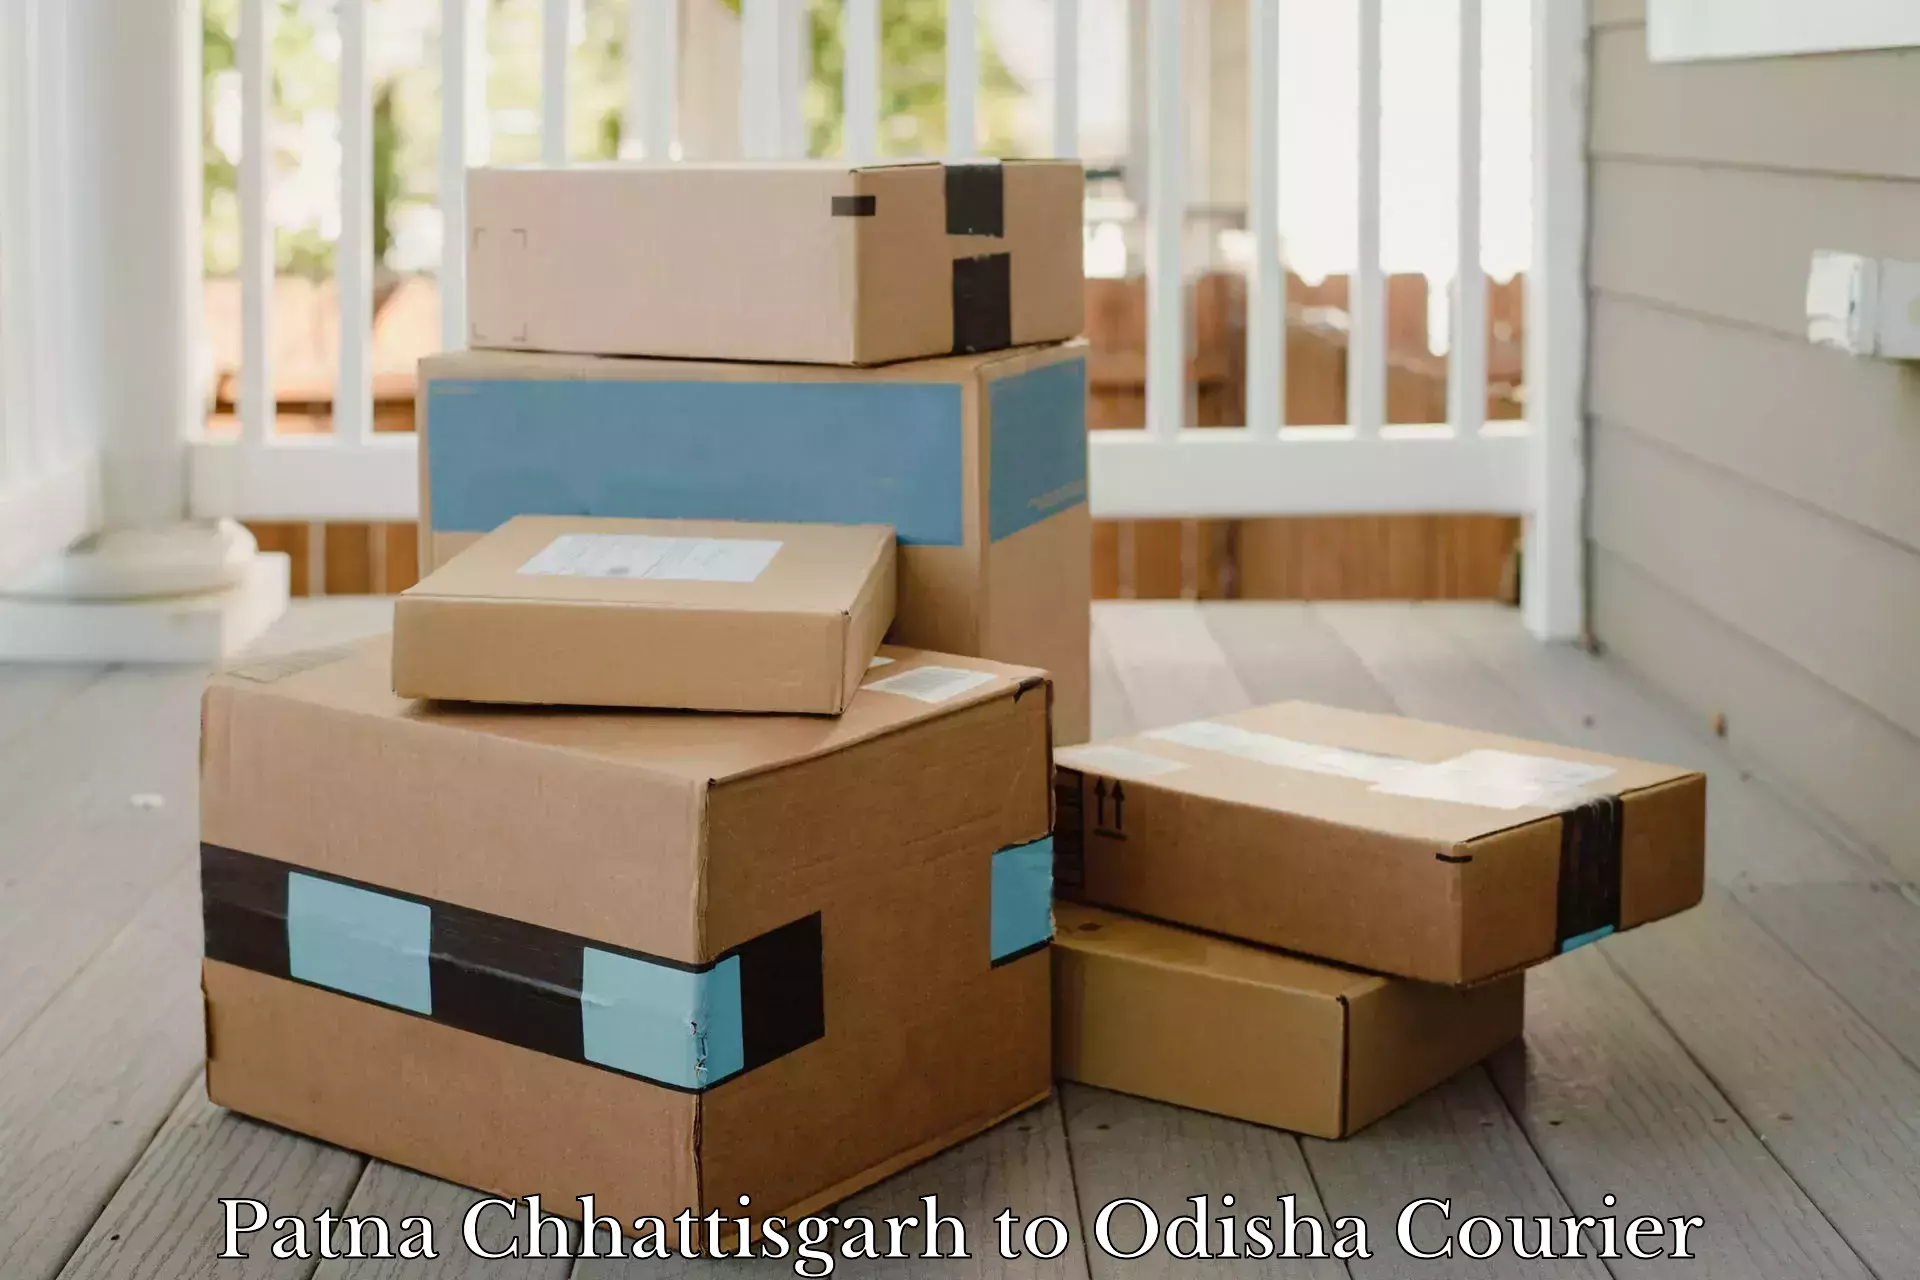 Courier service innovation Patna Chhattisgarh to Sohela